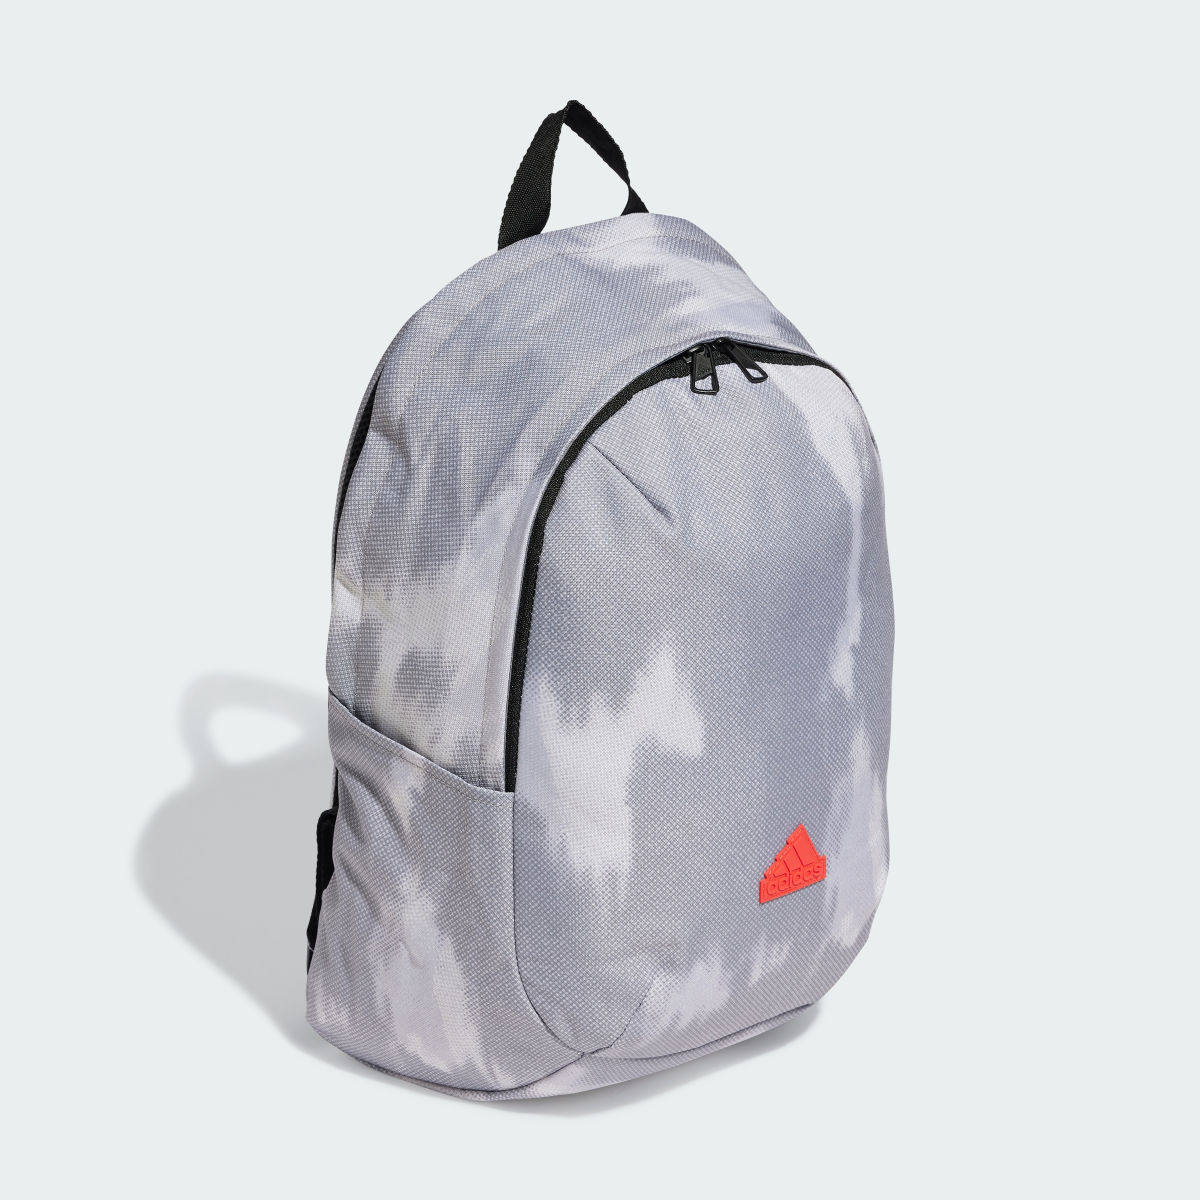 Adidas Cocoon Backpack. 4